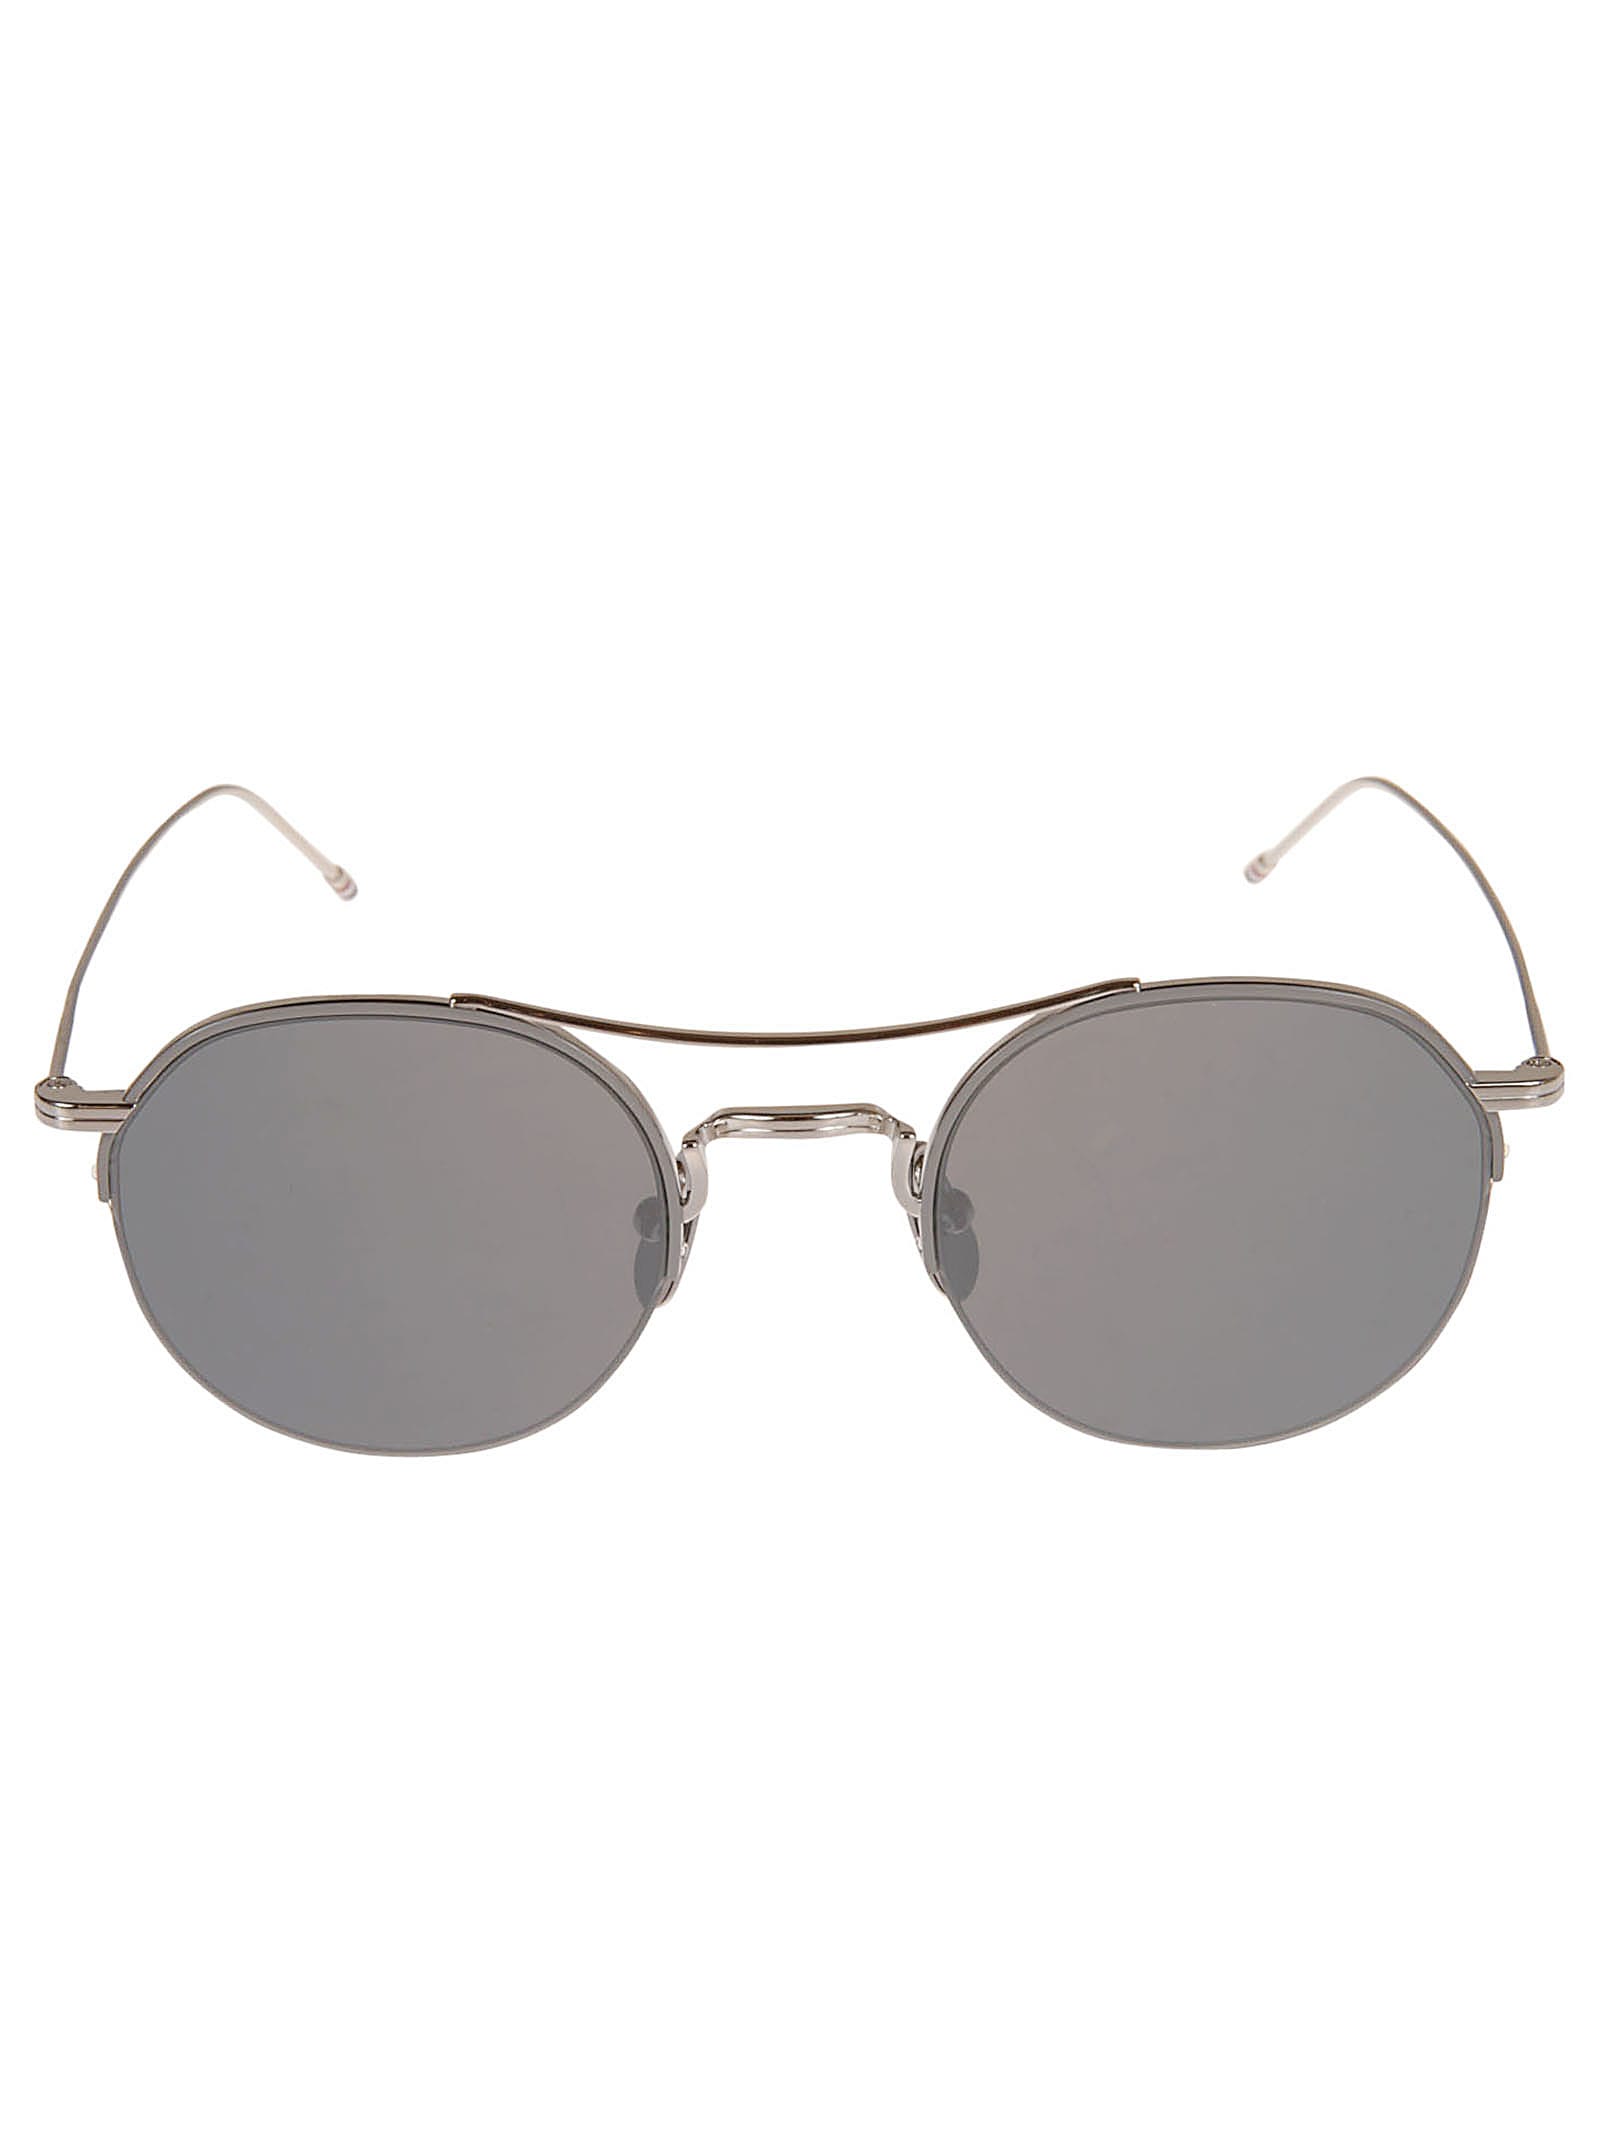 Dita Round Frame W/ Top Bar Sunglasses In Silver